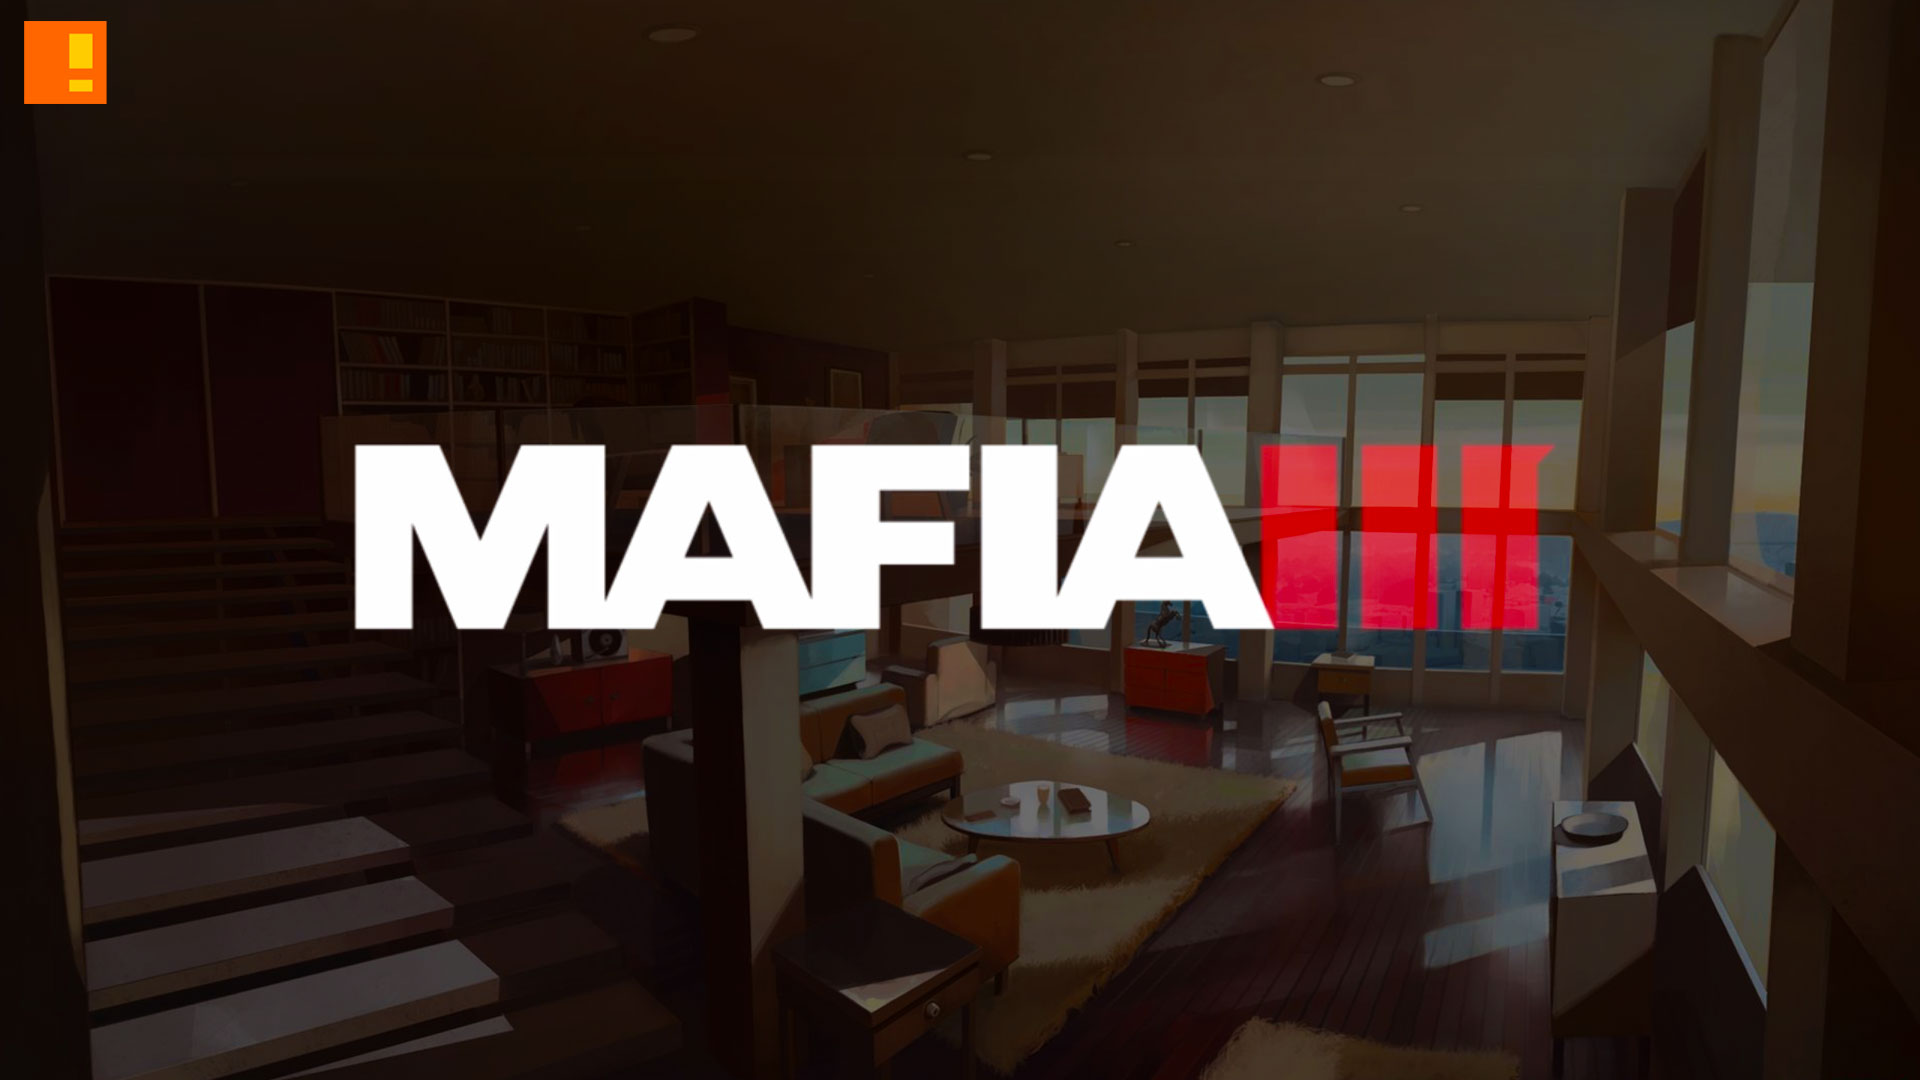 mafia 3 concept art . the action pixel. @theactionpixel. 2k